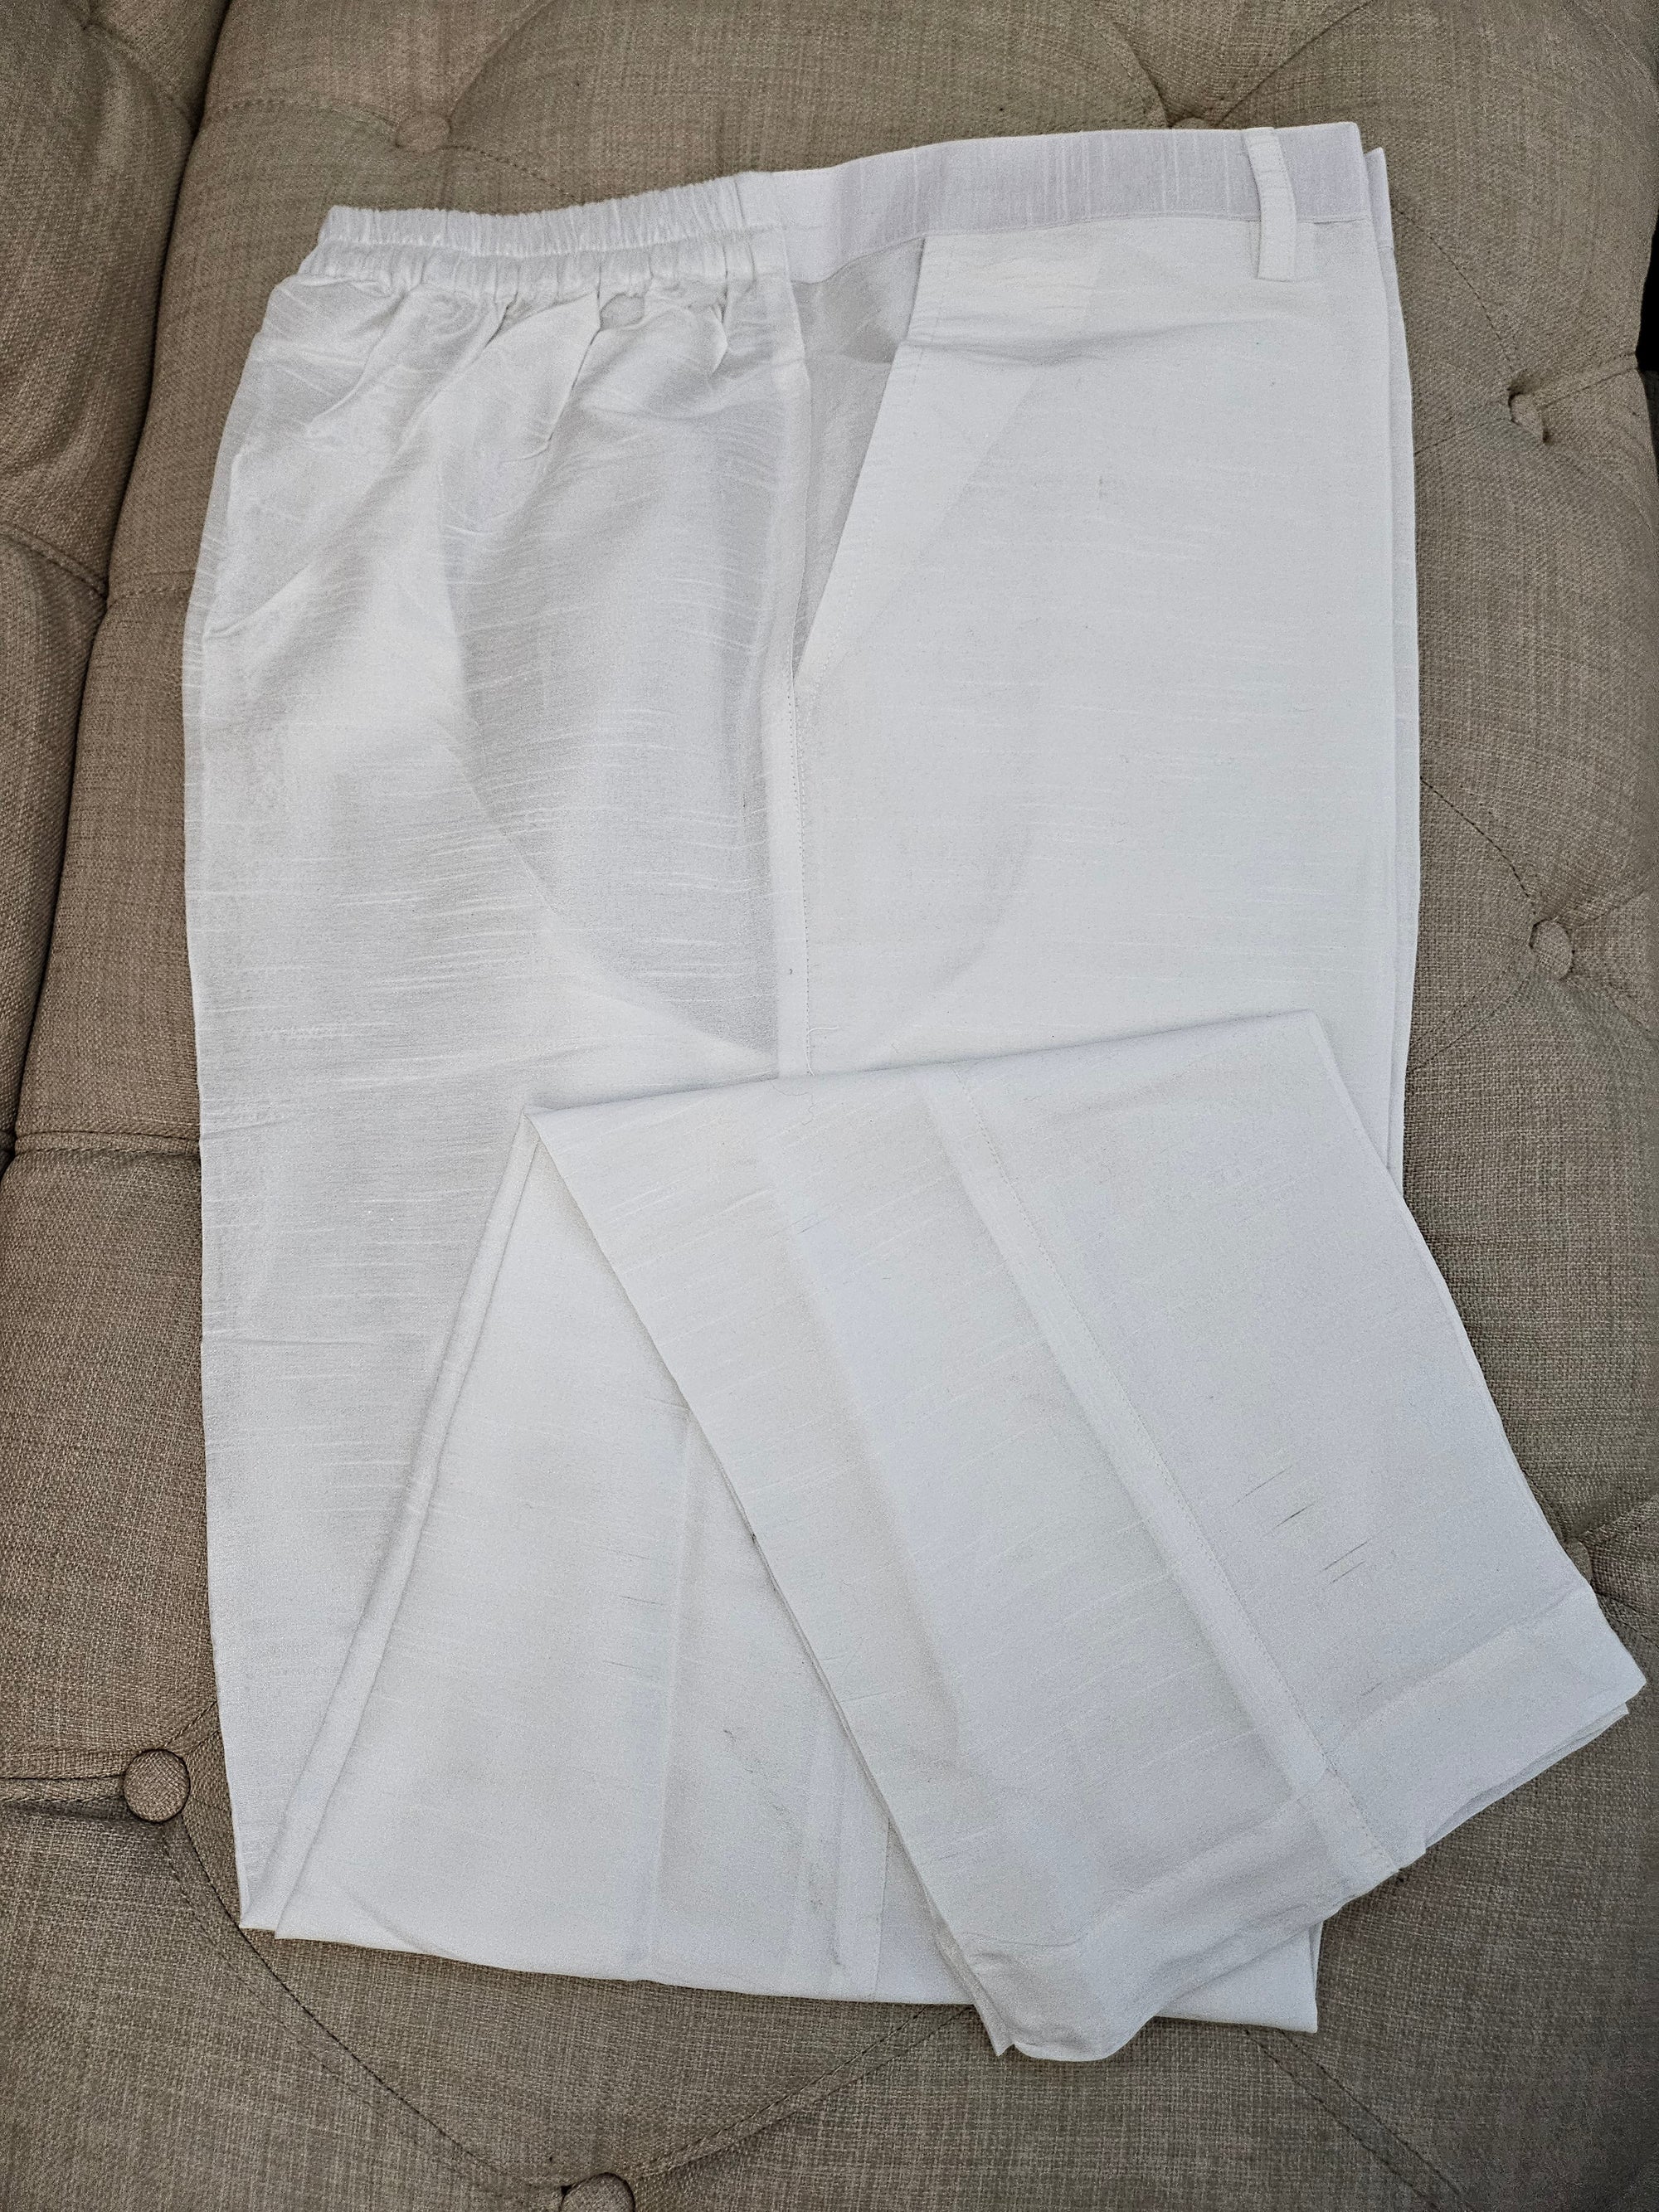 Size 46, Pure White Chikankari in full 2 Piece Kurta Pajama Set for Man, Embroidered Partywear, KP - 1212